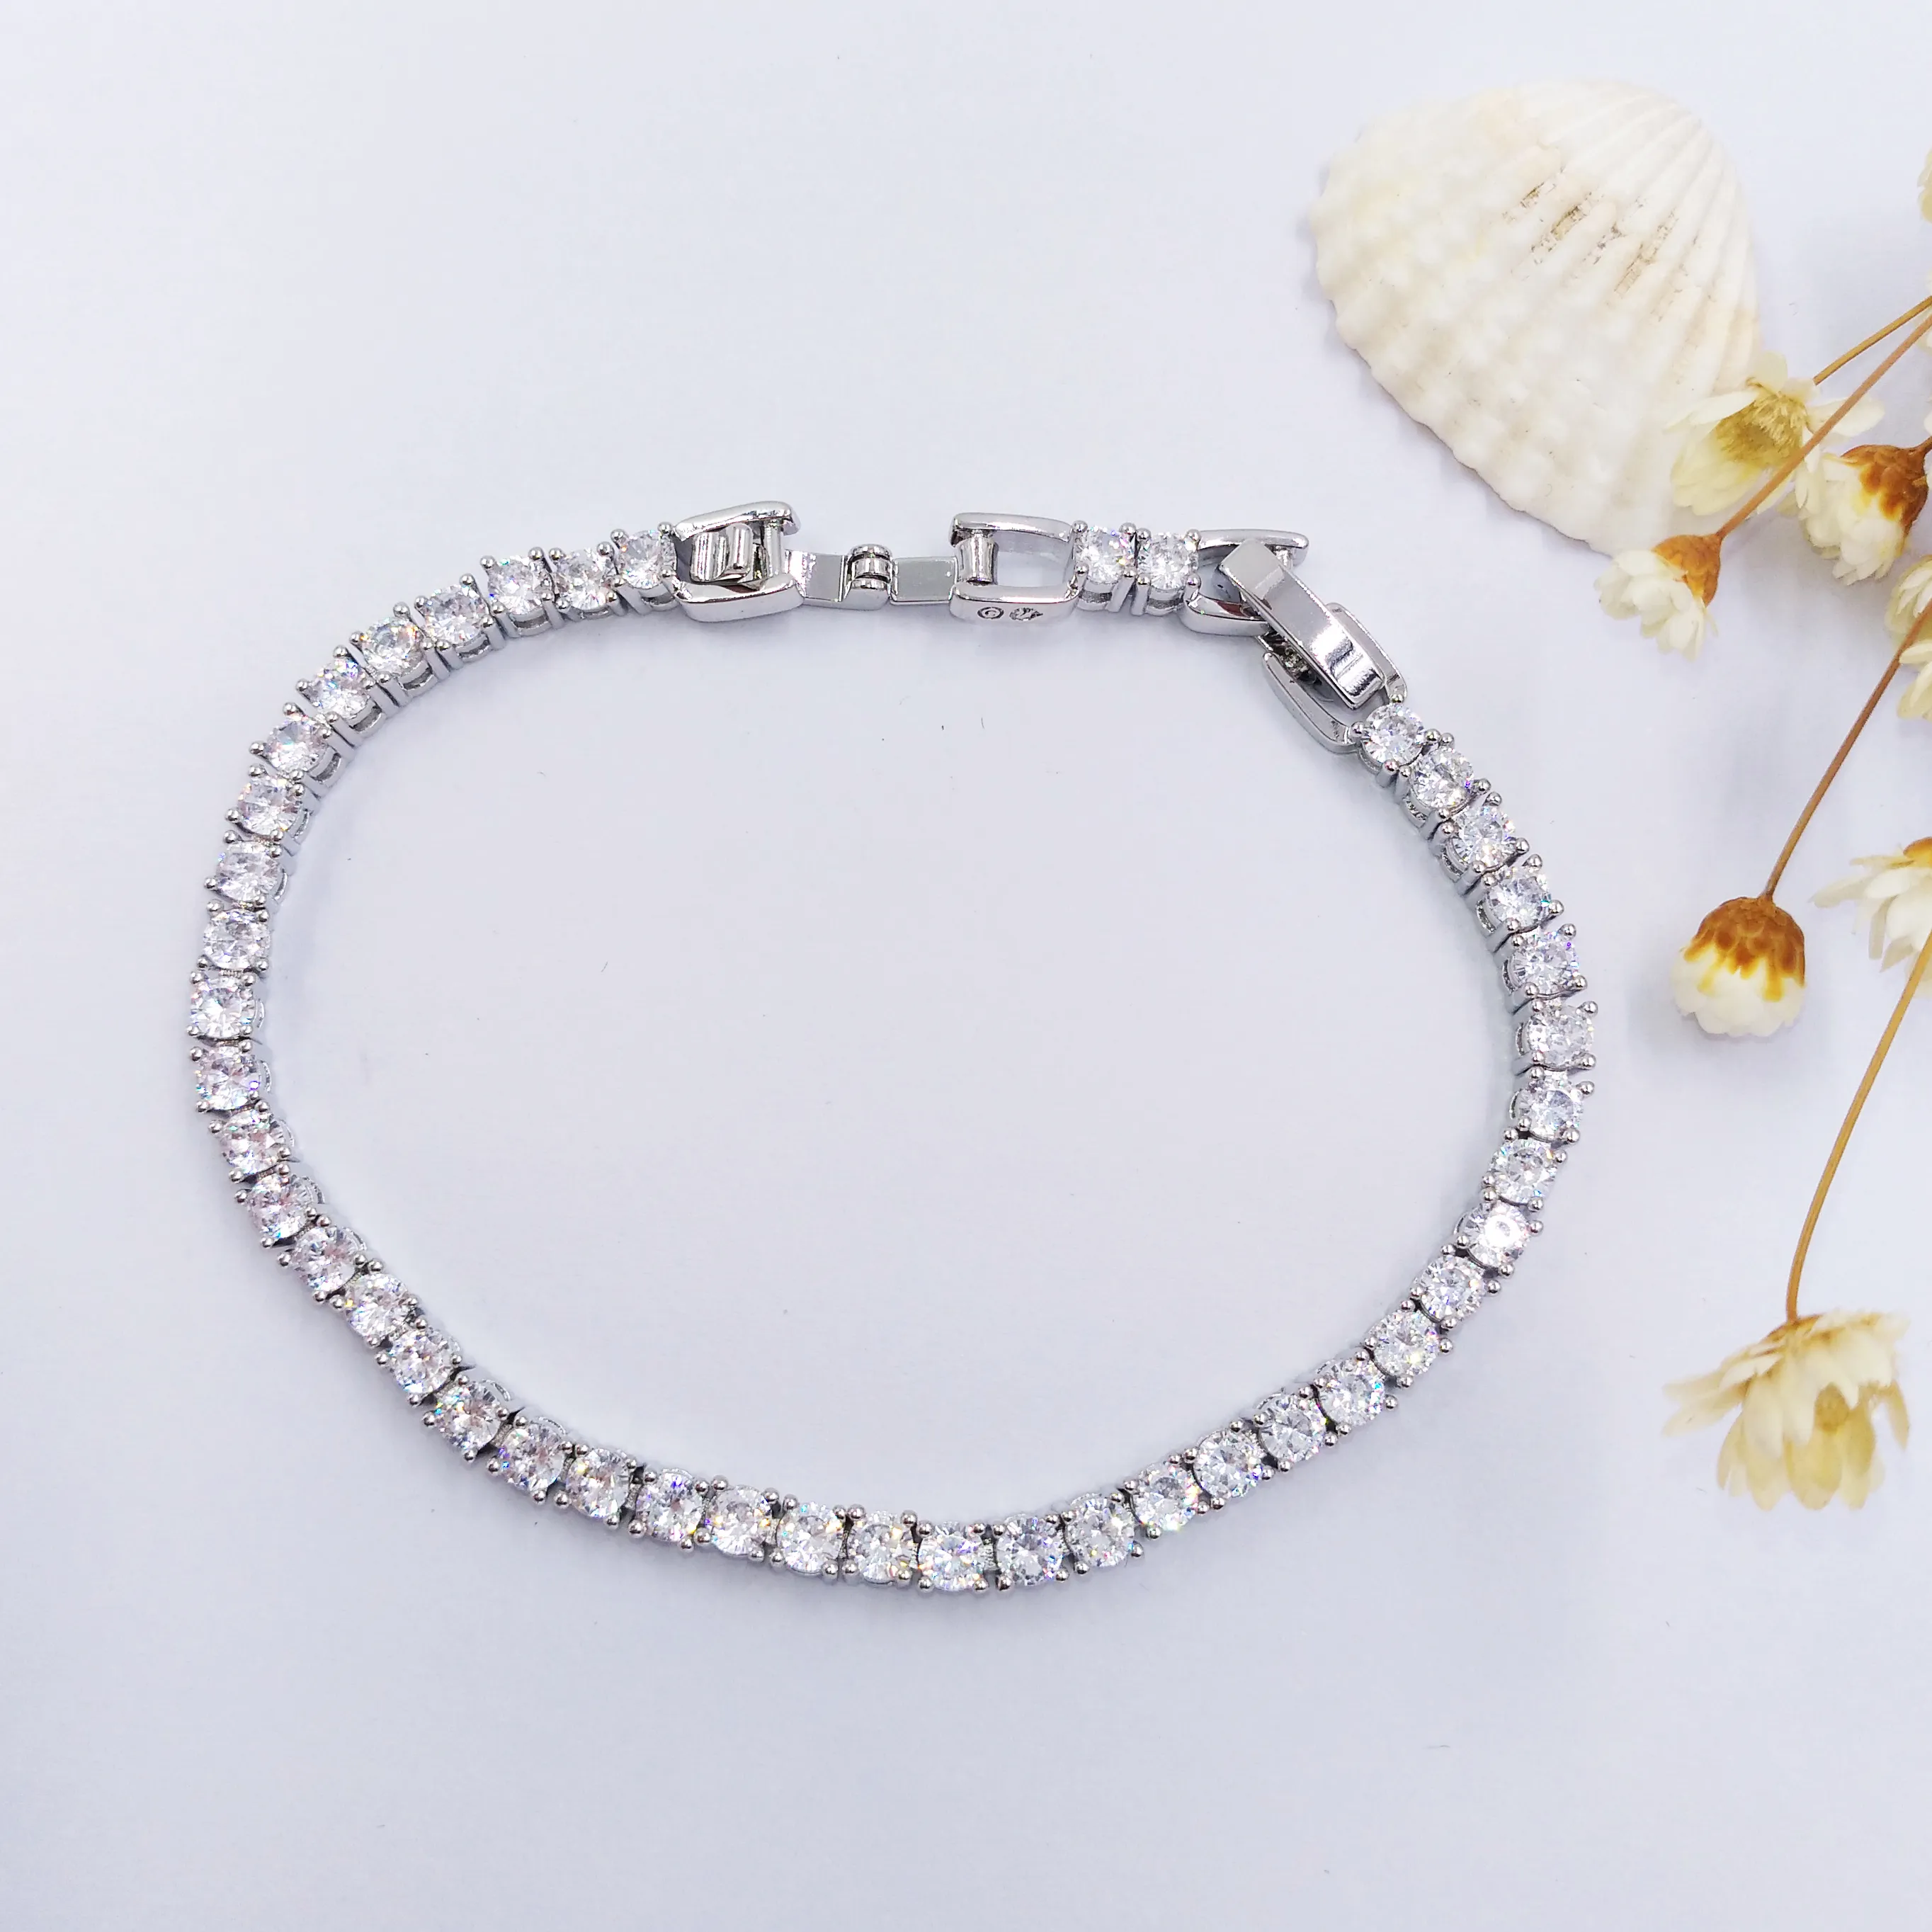 Tennis Bracelets Lined bracelet, diamond, gold and silver bracelet, jewelry gift, fashion women's bracelet alloy material mens bangle bracelet annajewel